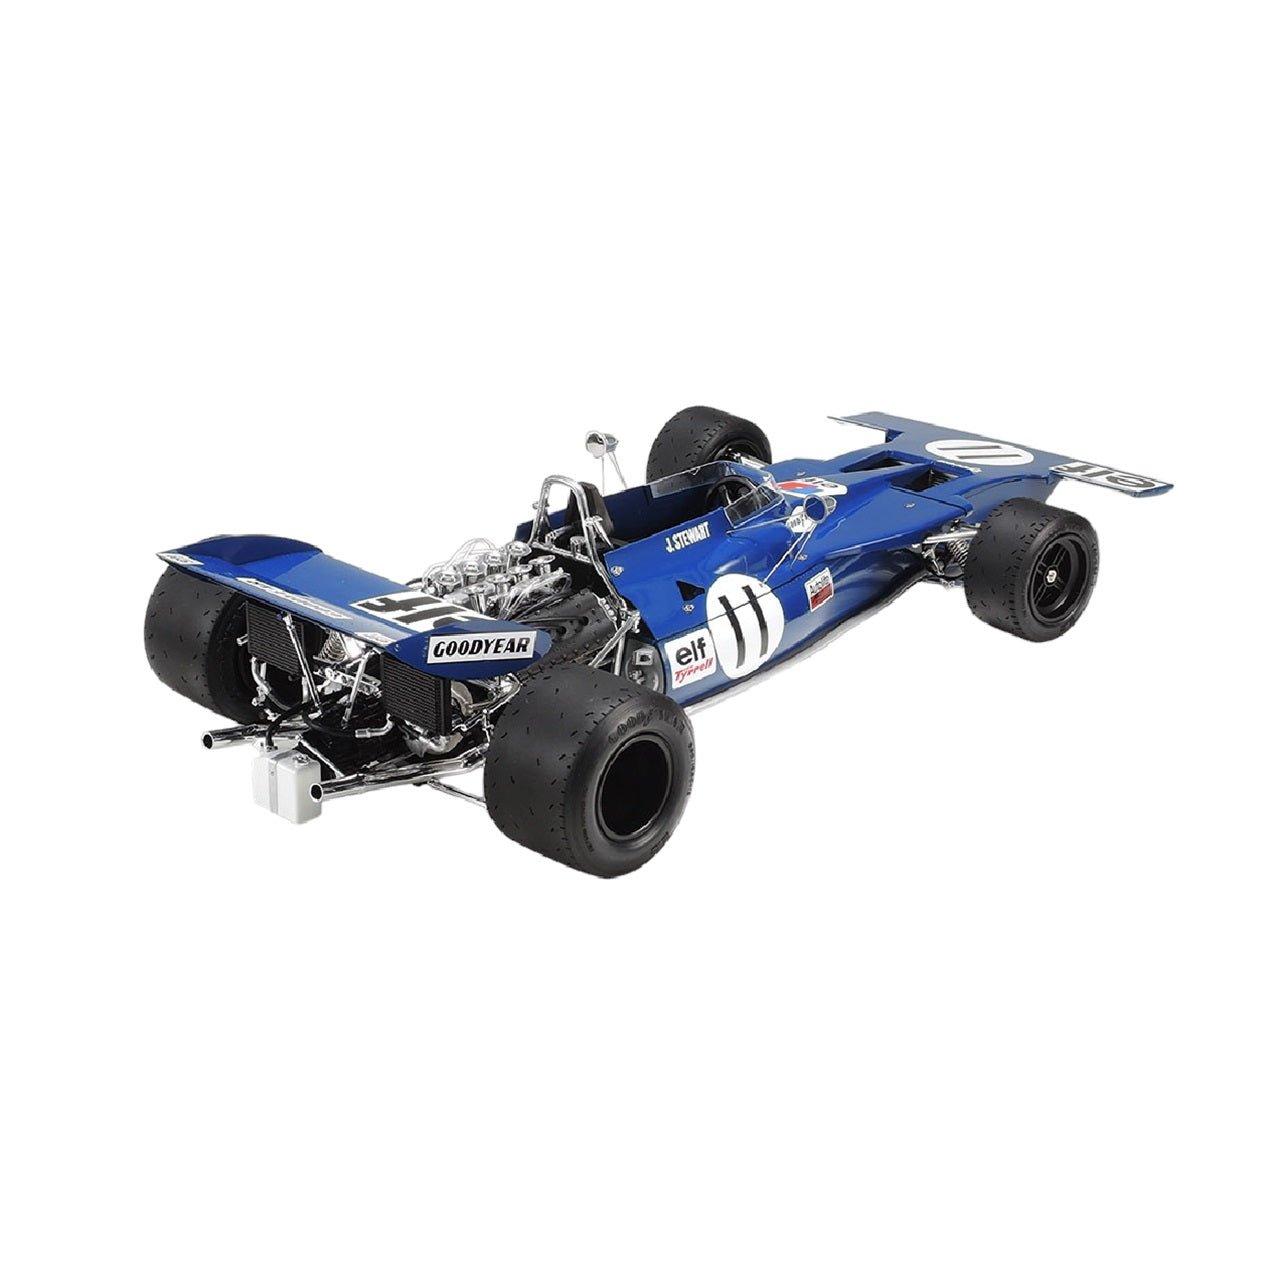 Tamiya Tyrrell 003 Formula One Plastic Model Kit, 1/12 Scale